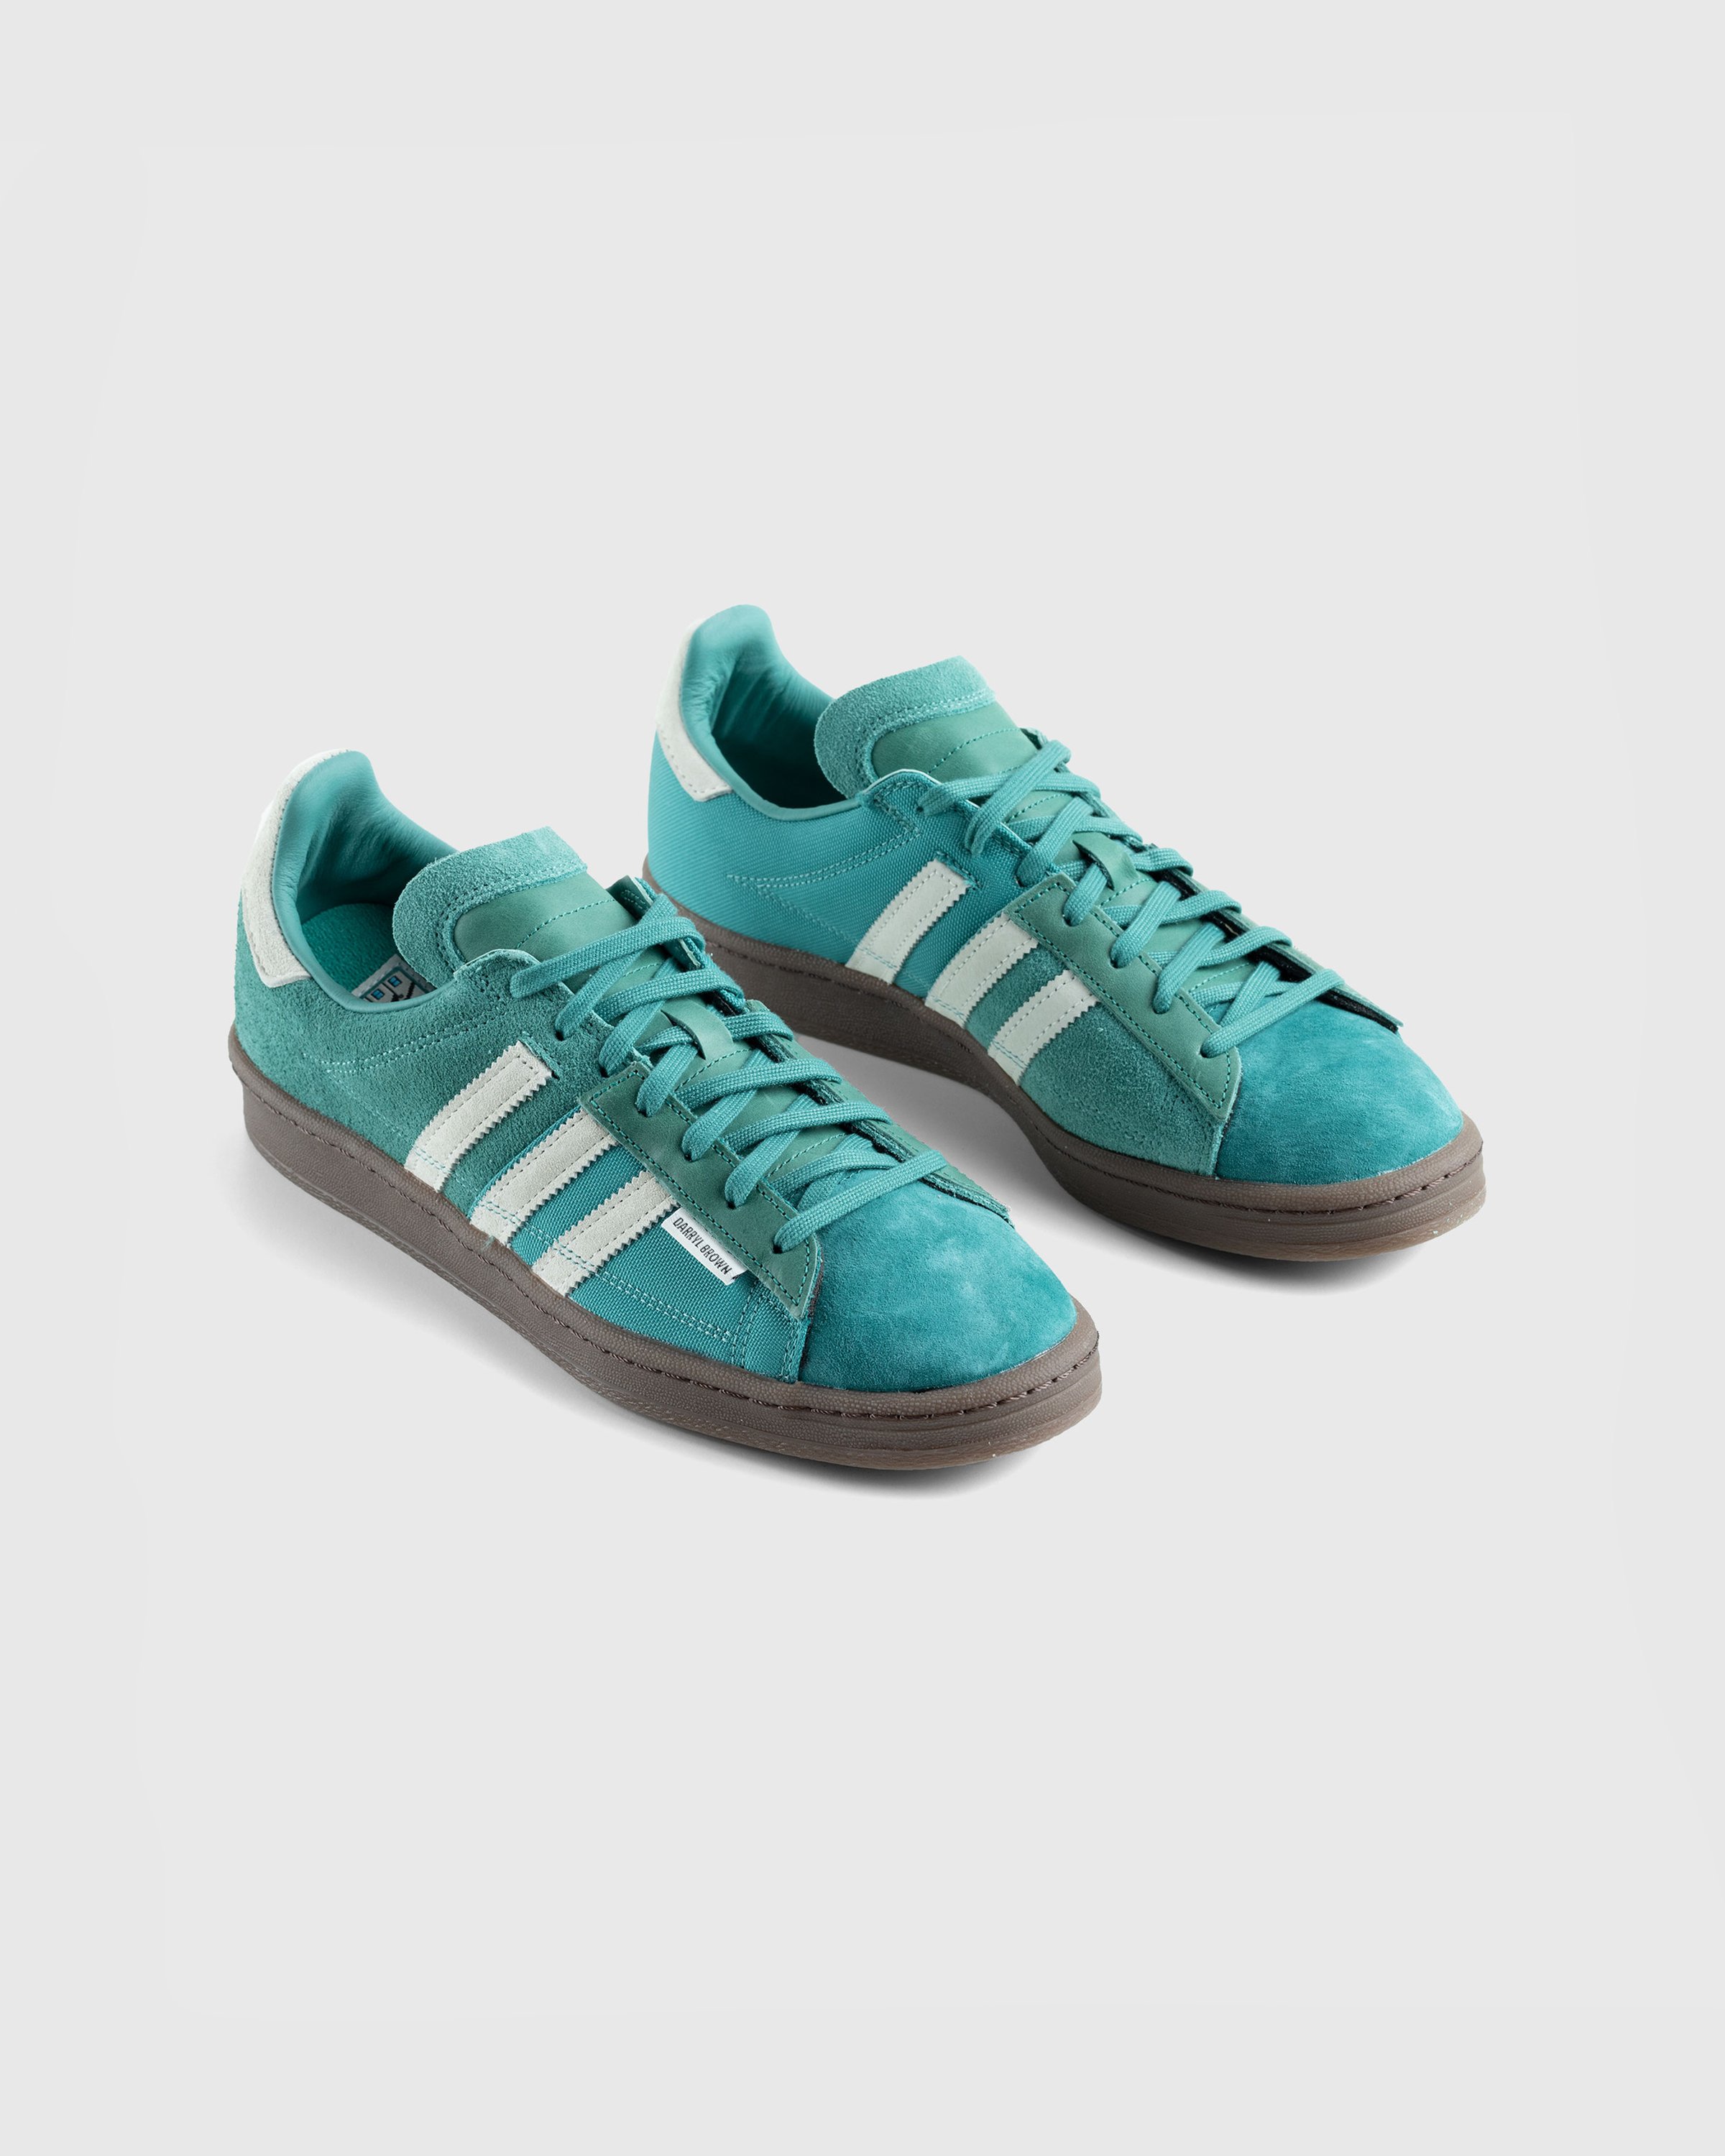 Adidas x Darryl Brown - Campus 80 - Footwear - Green - Image 3